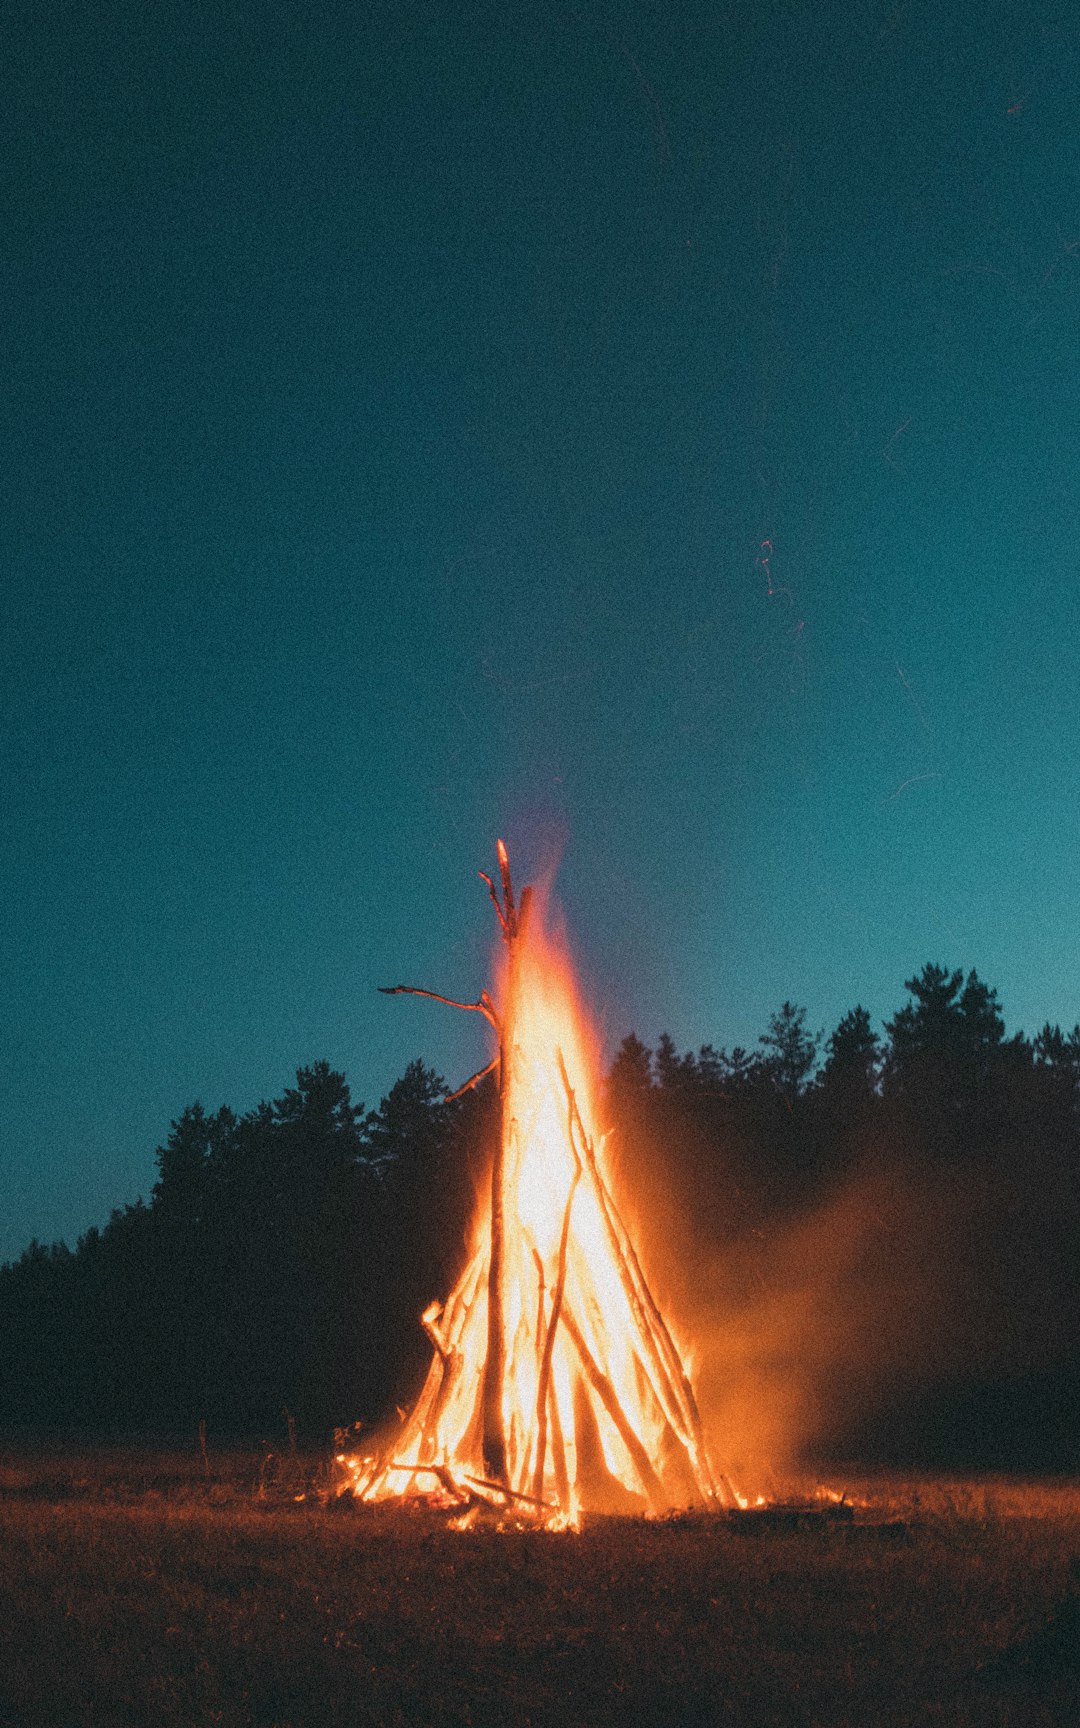 bonfire under blue sky during nighttime